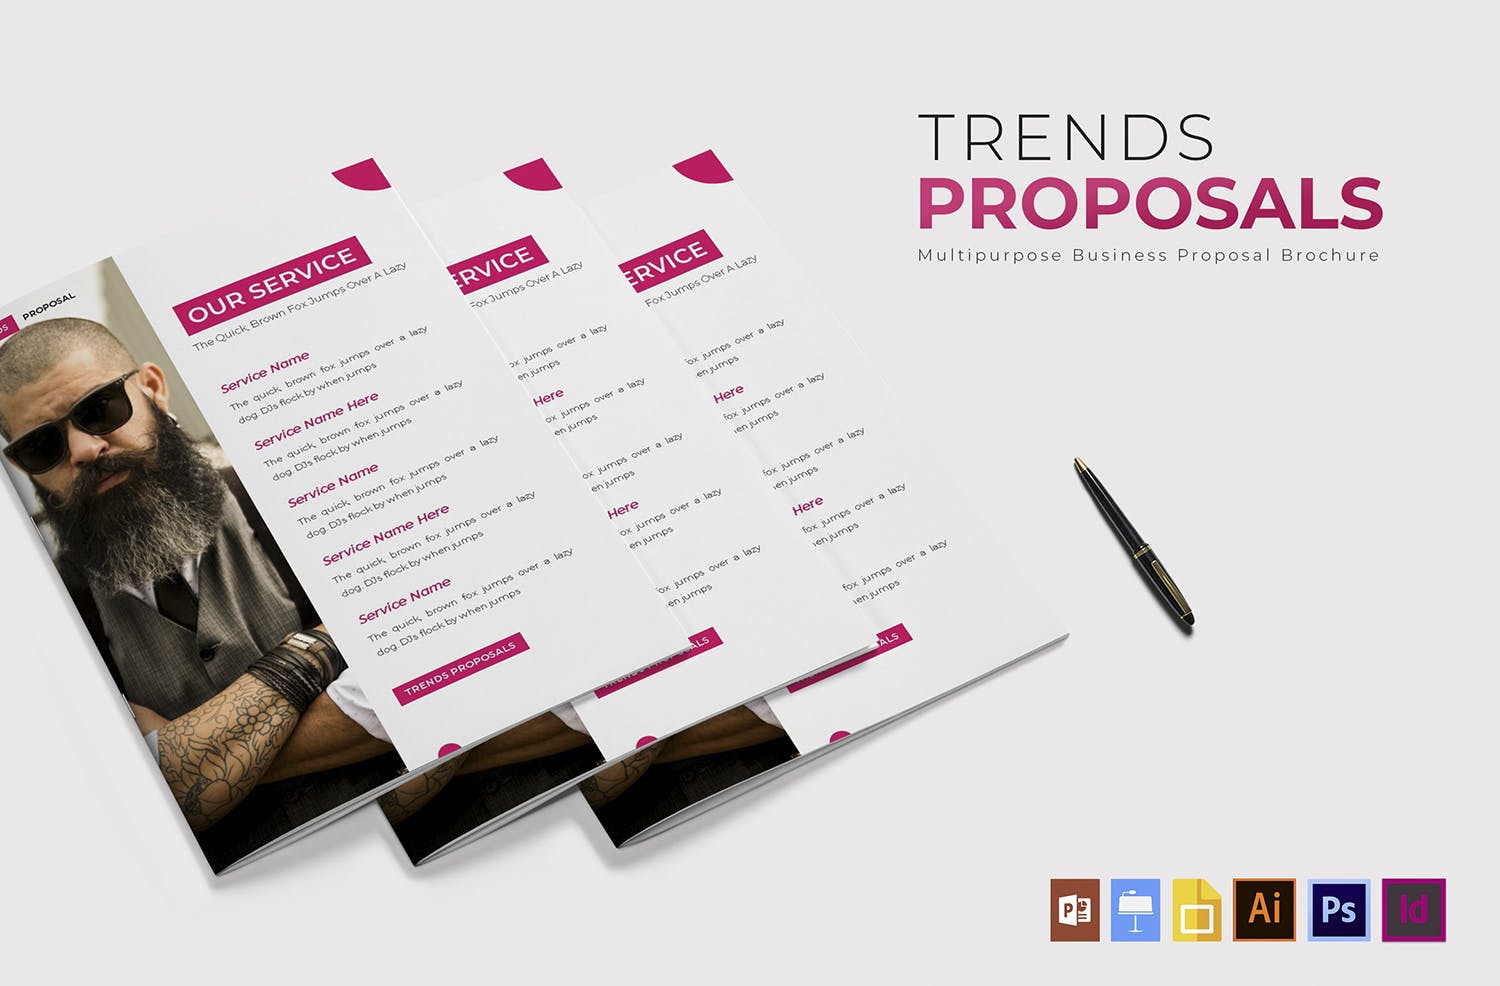 招标提案书设计模板 Trends | Proposal Brochure插图(3)